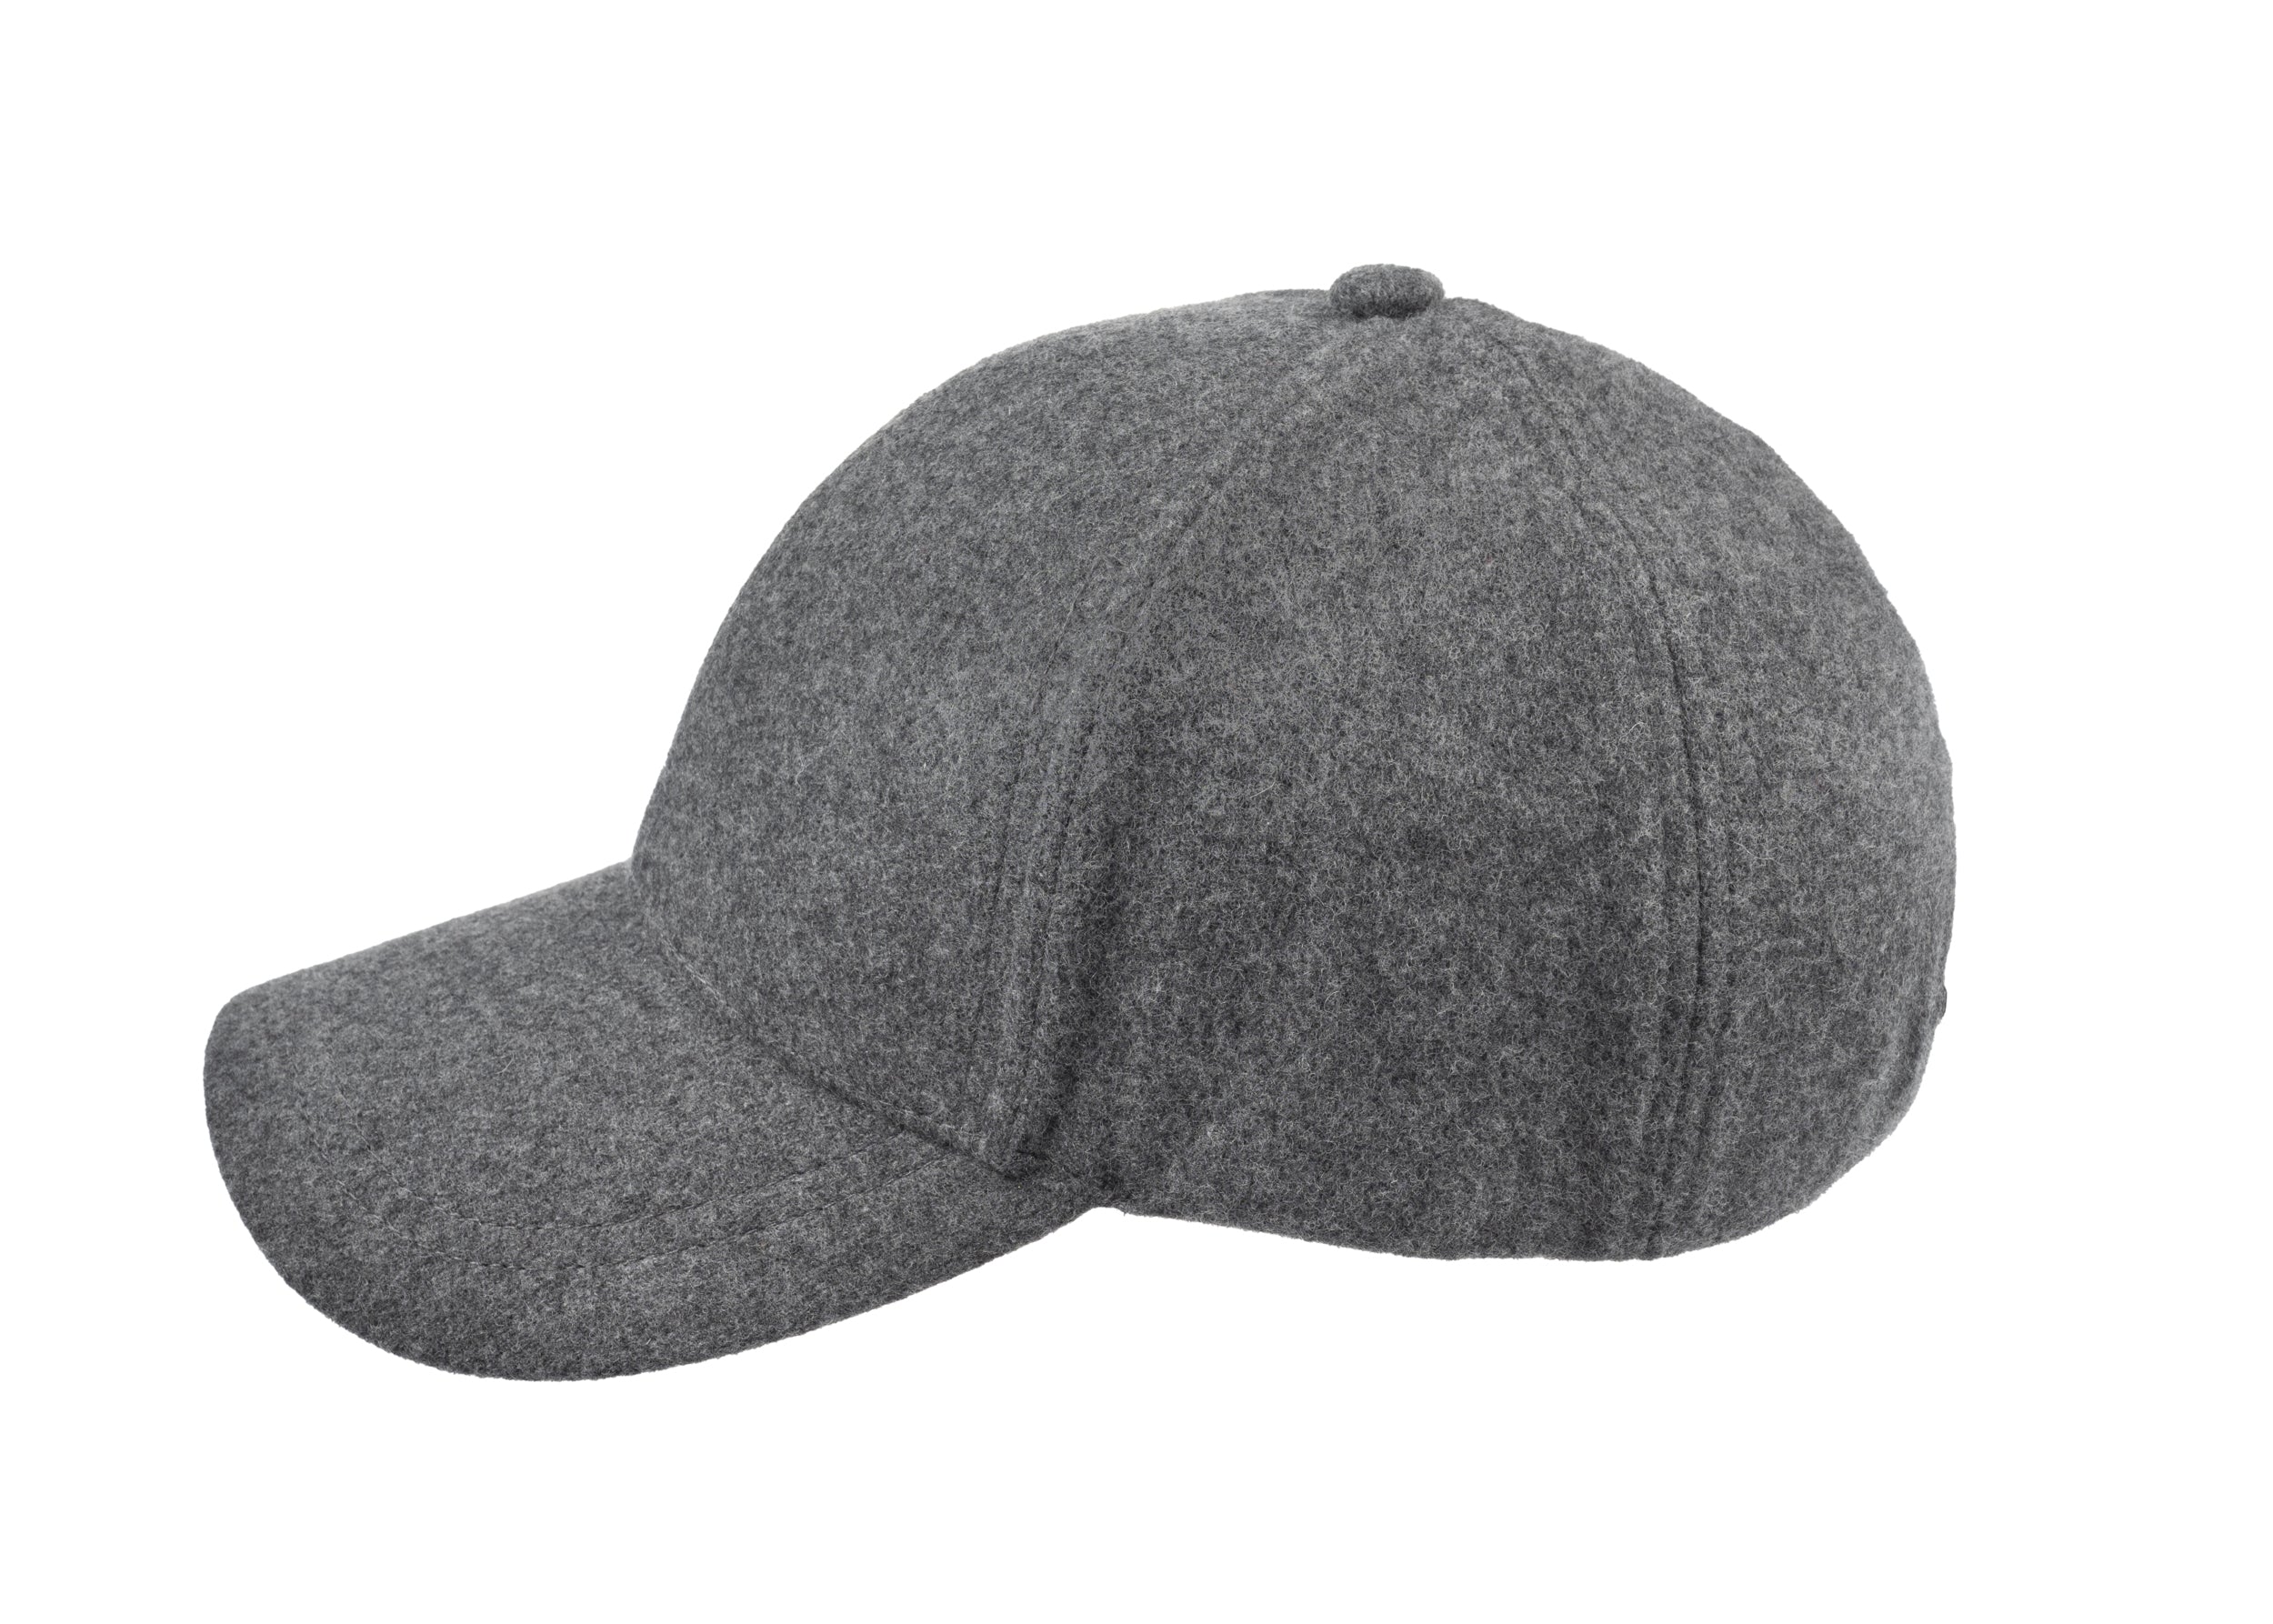 Josh baseball cap in cashmere/wool blend fabric in Grey